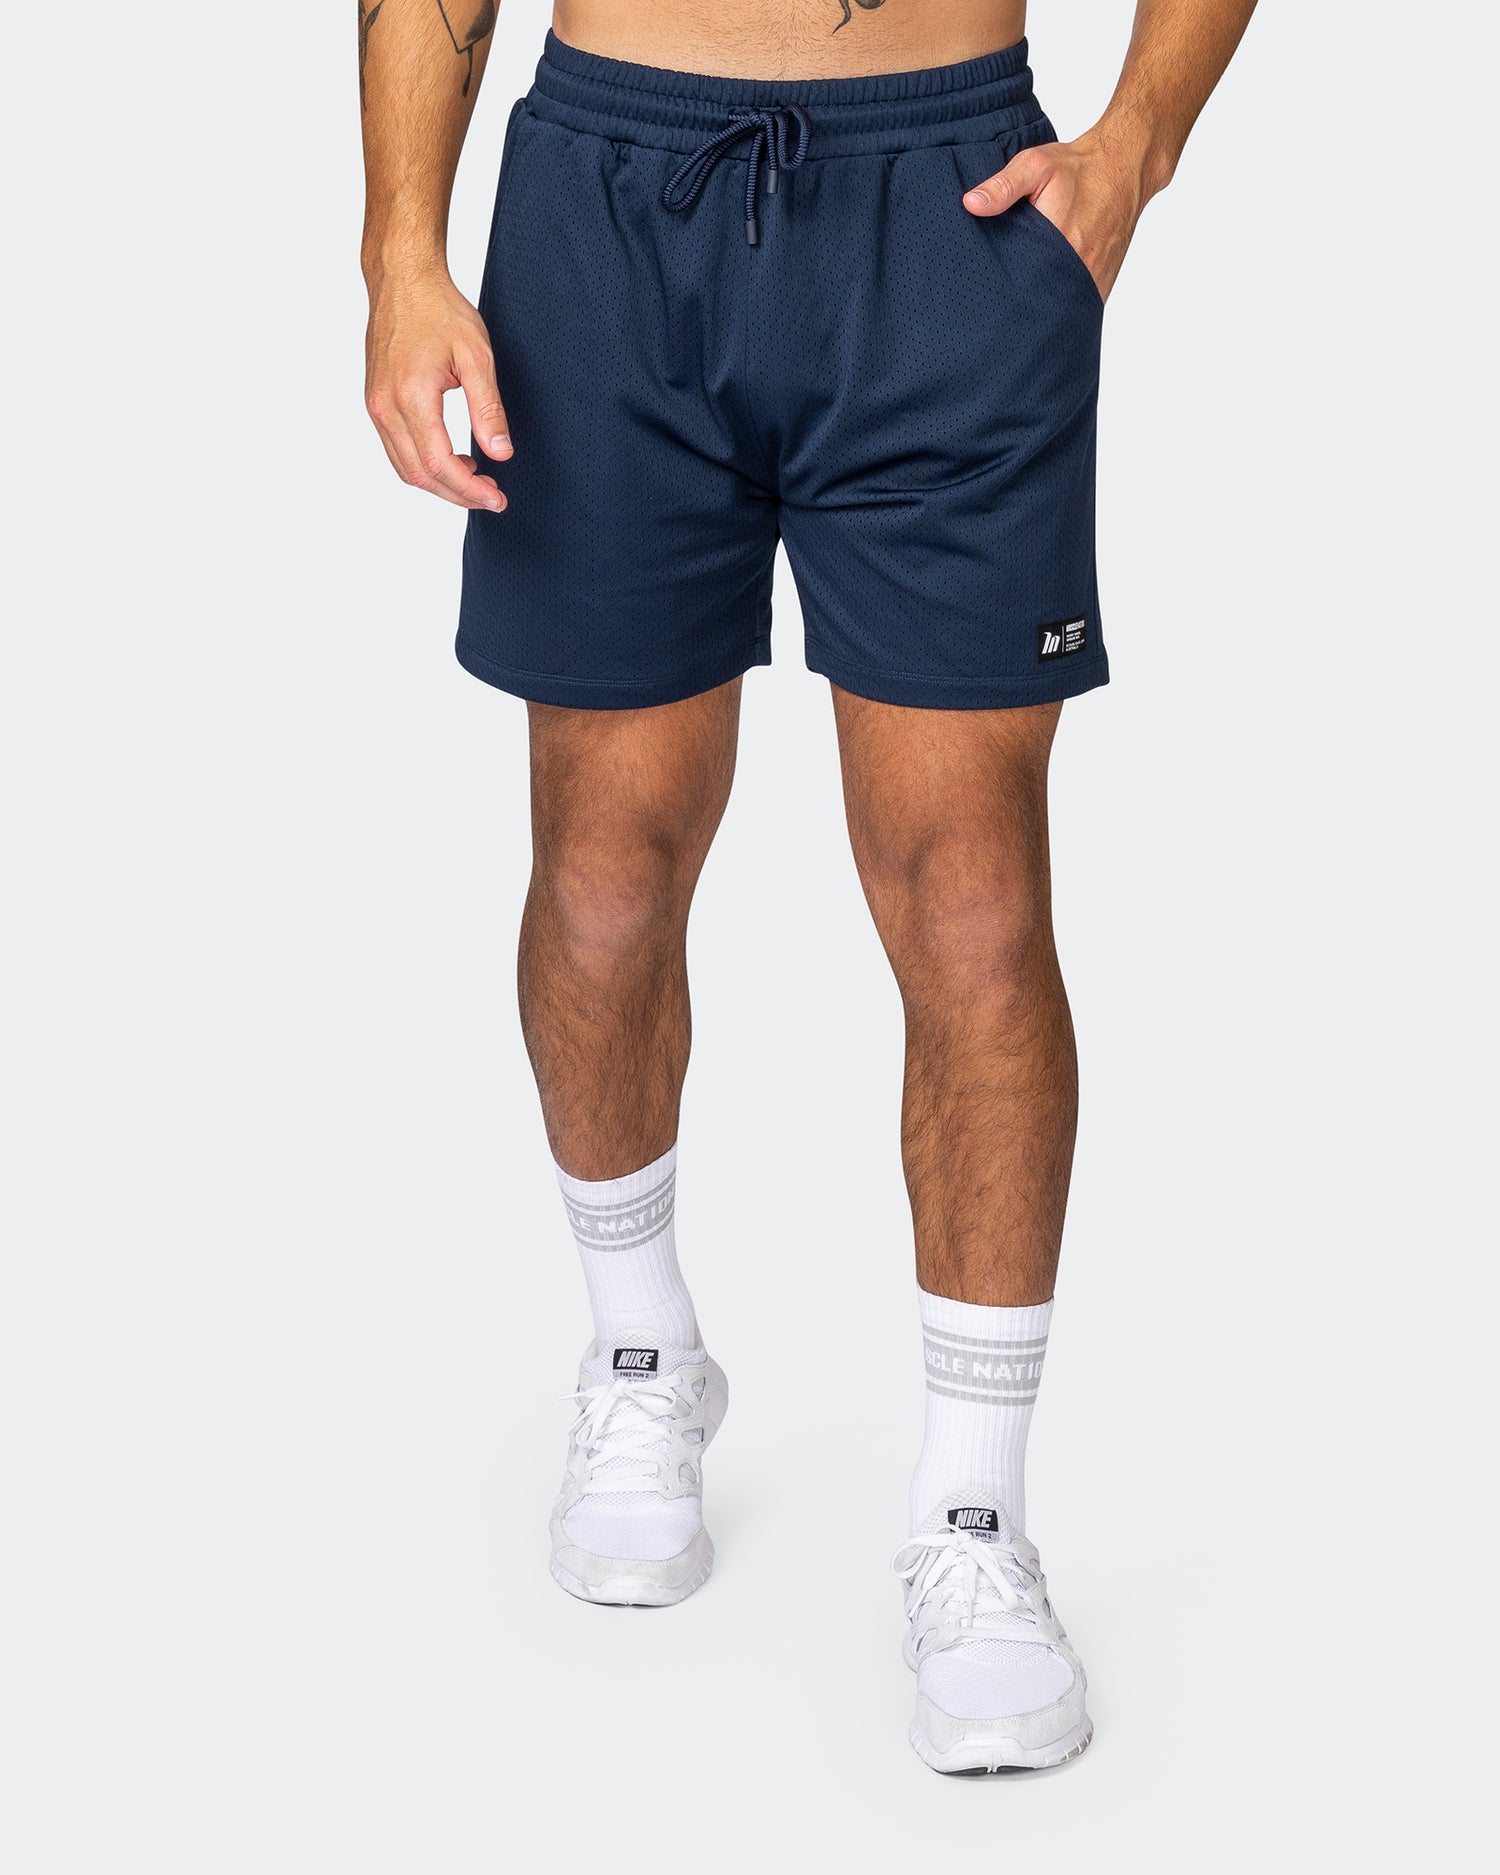 Lay Up 5" Shorts - Navy